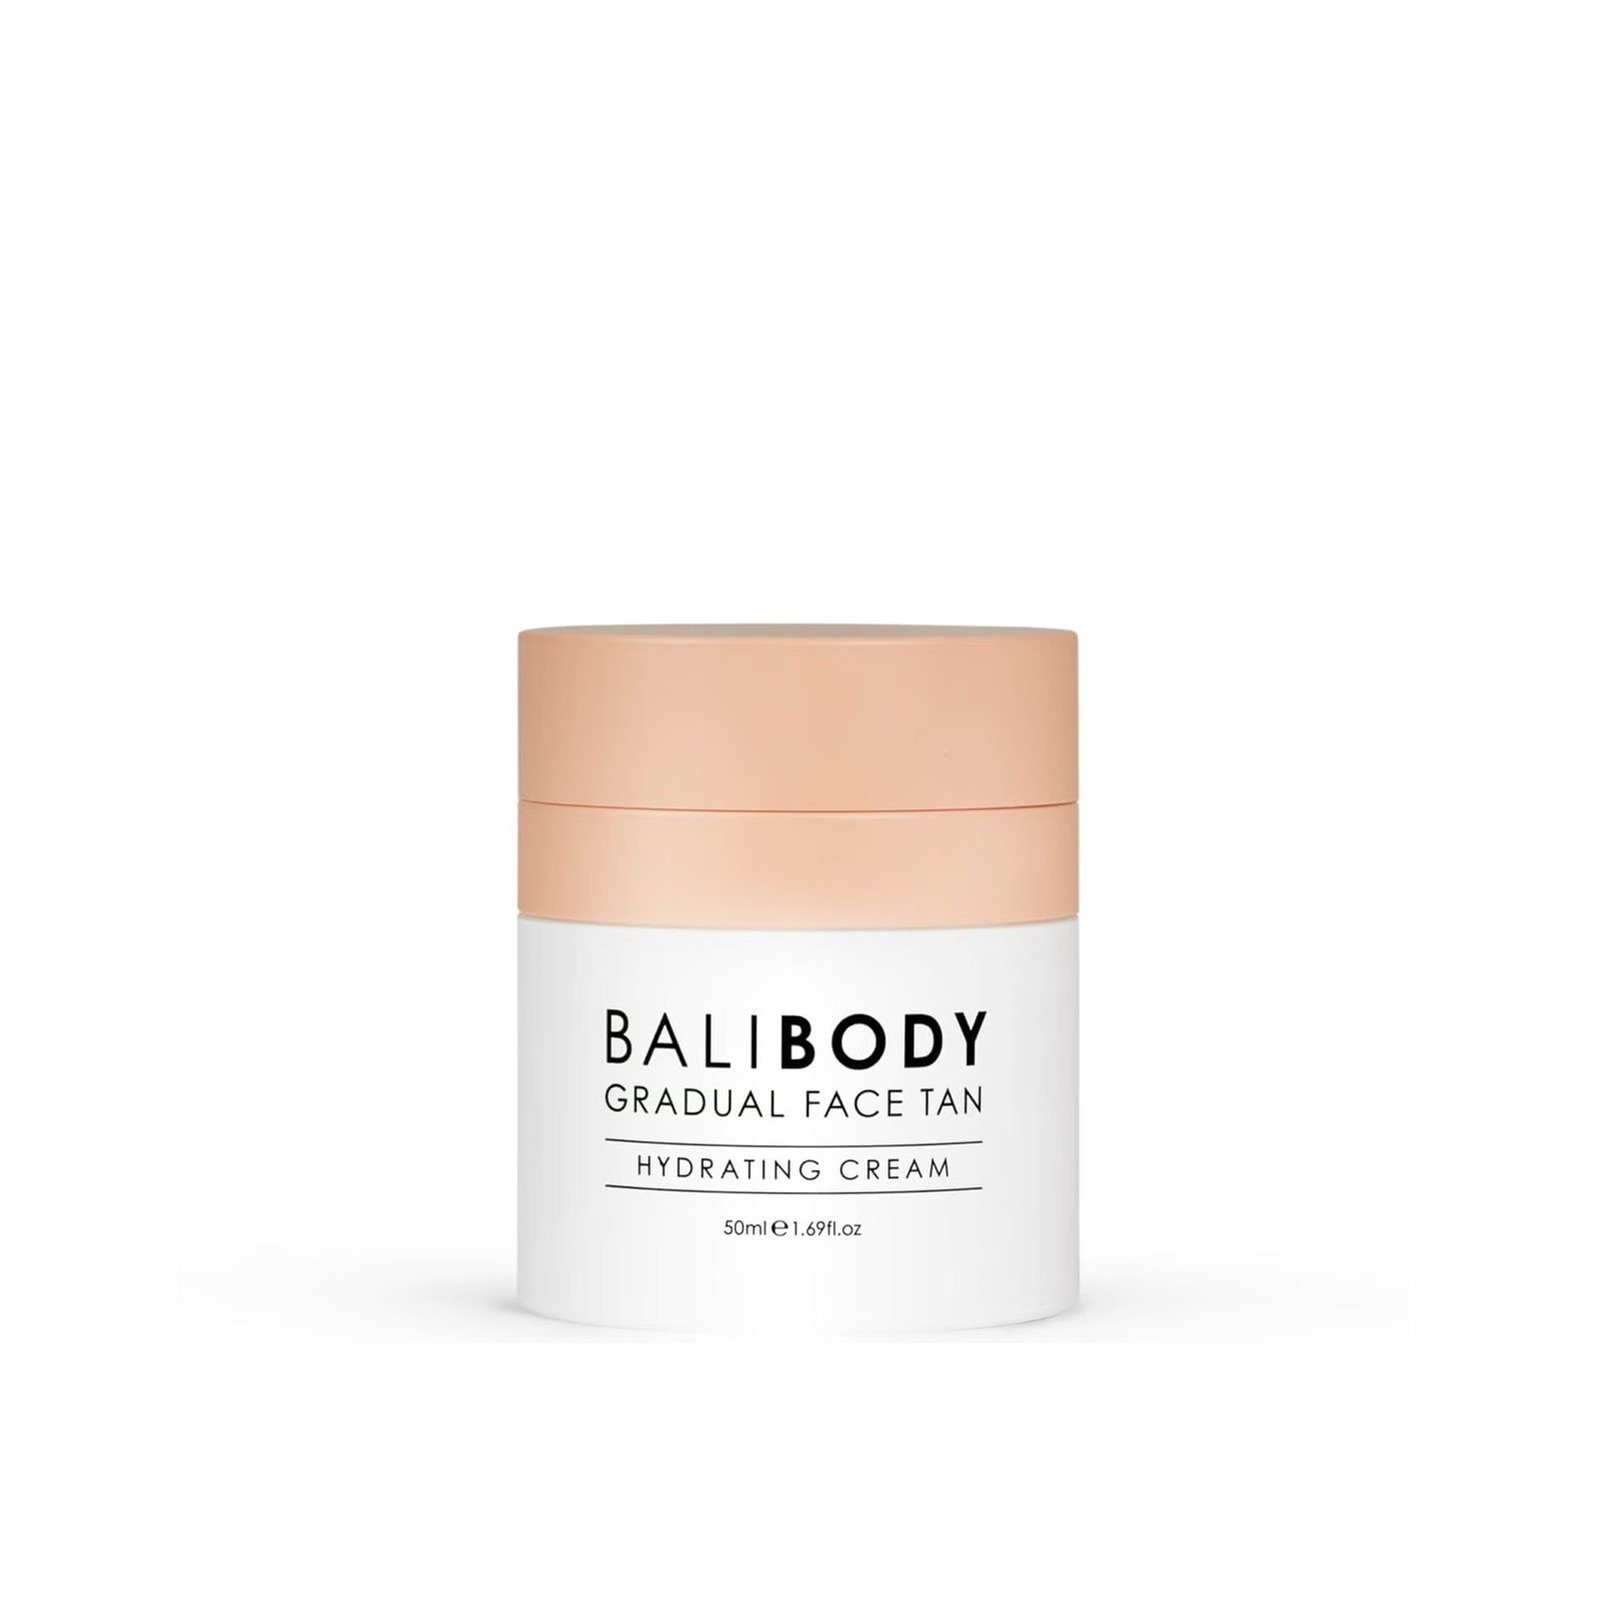 Bali Body Gradual Face Tan Hydrating Cream 50ml (1.69floz)